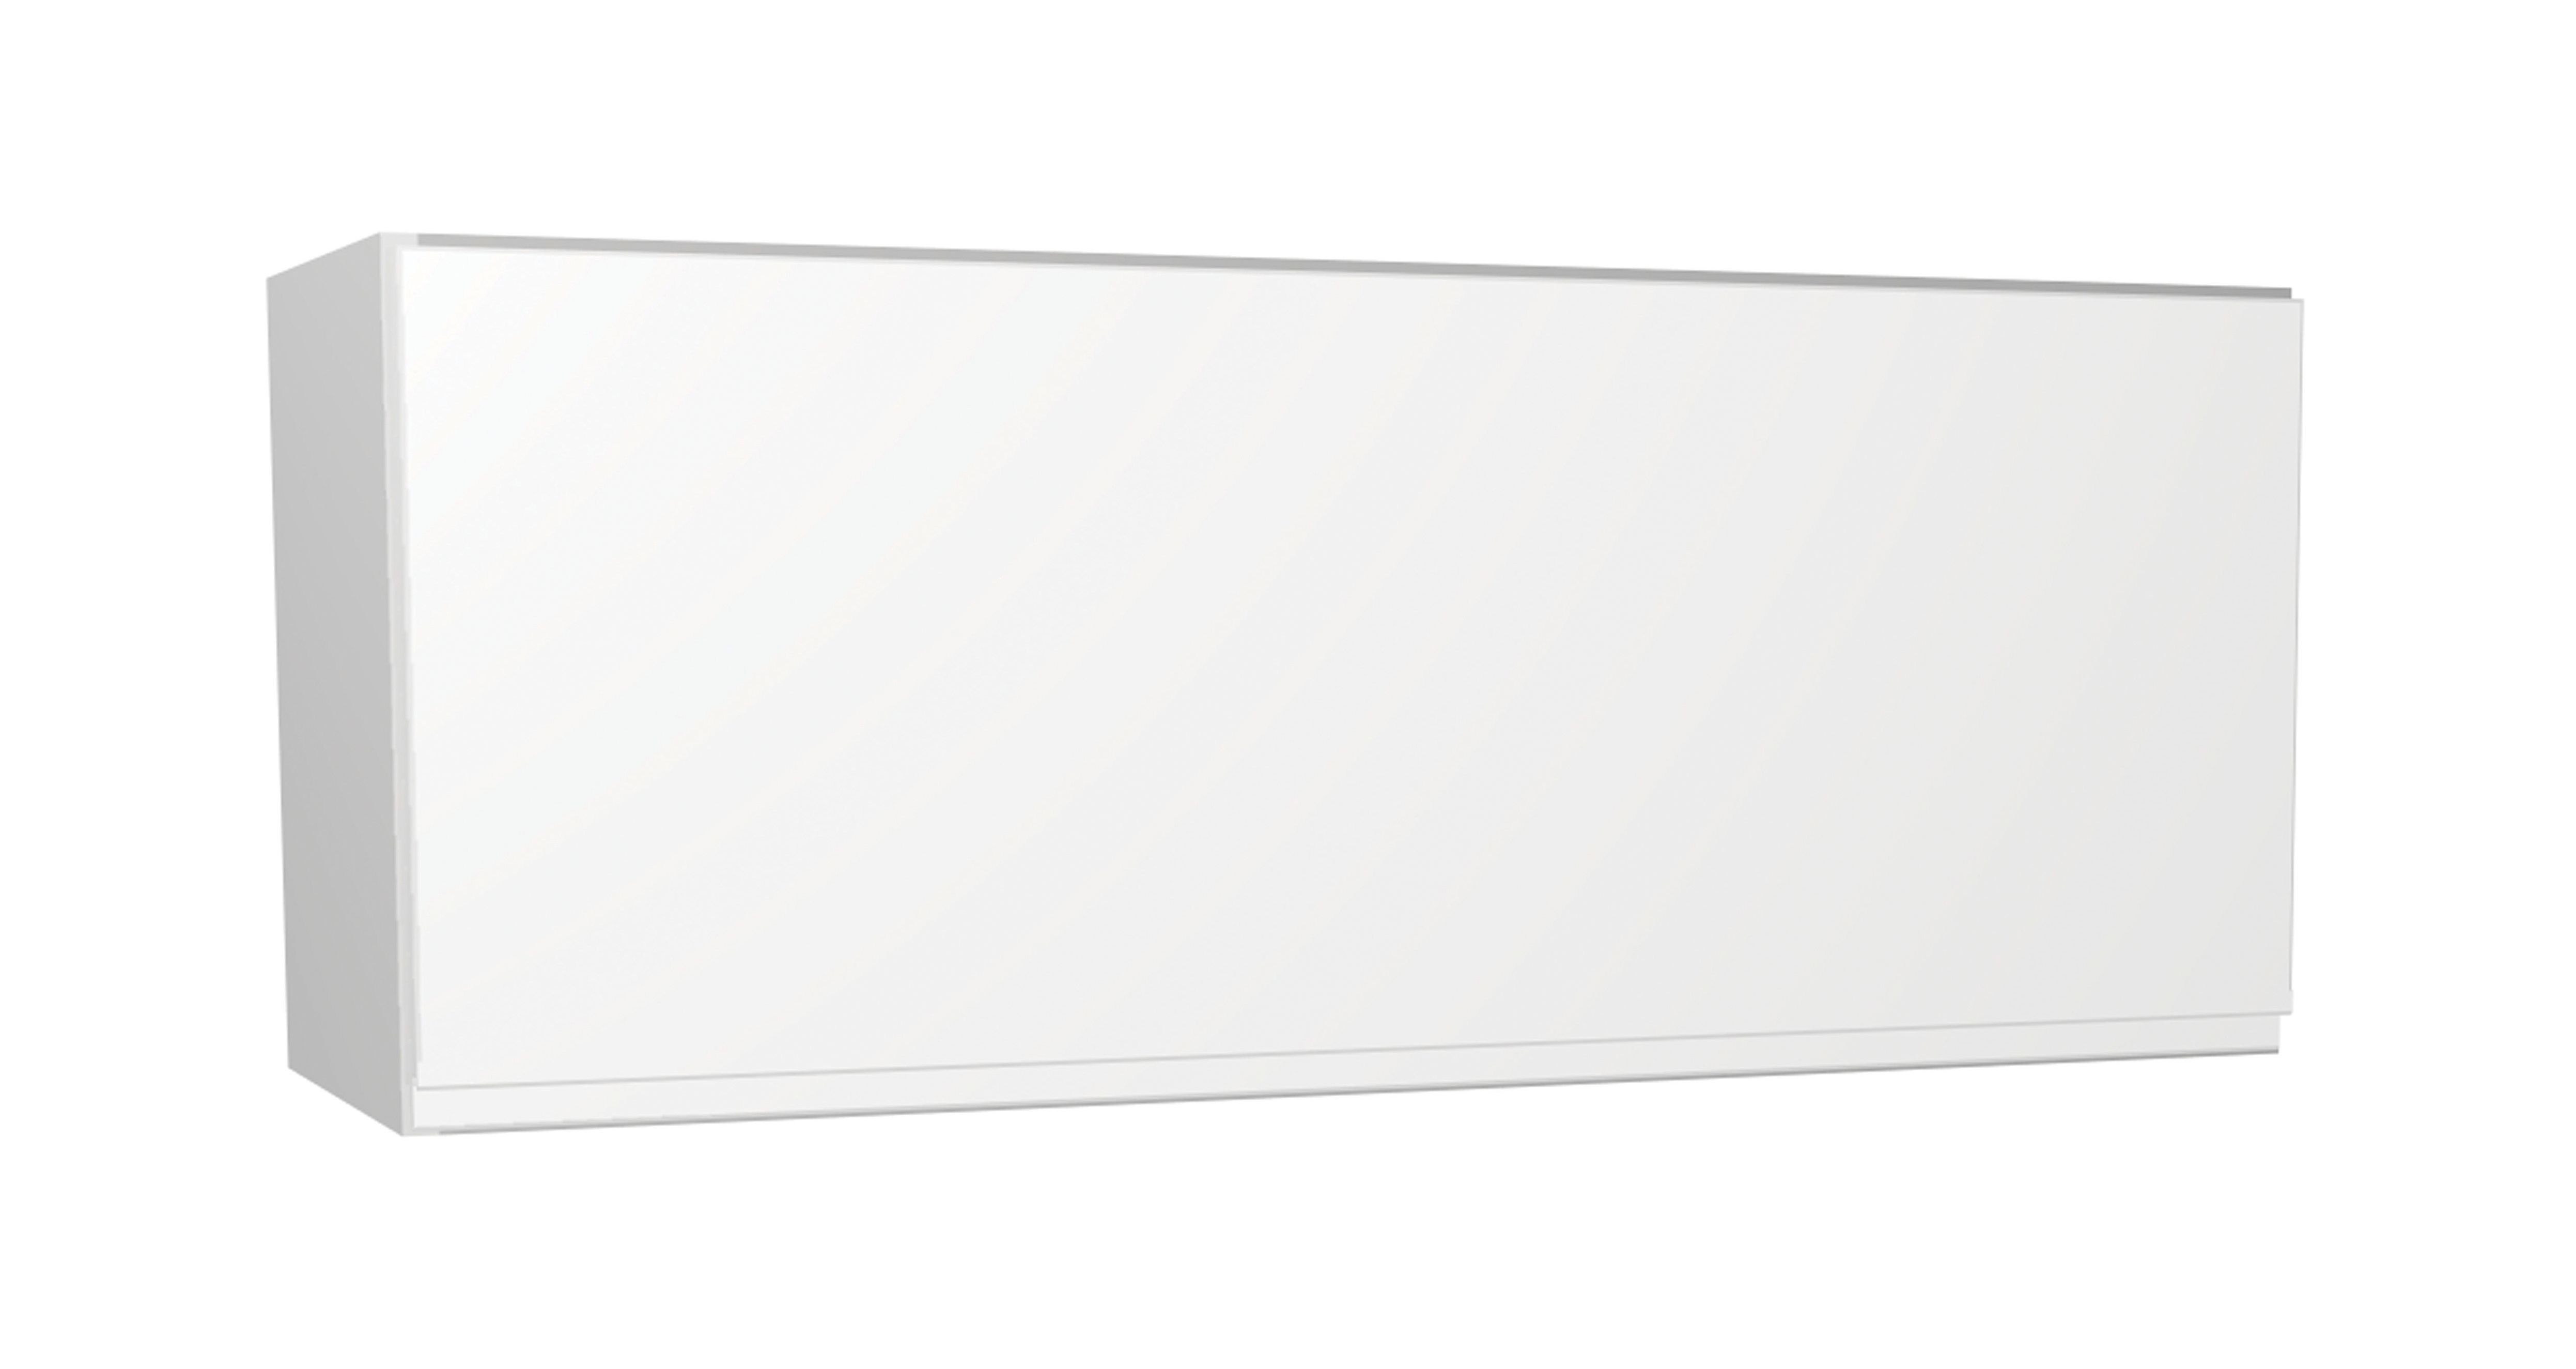 Wickes Madison White Gloss Handleless Narrow Wall Unit - 900mm | Wickes ...